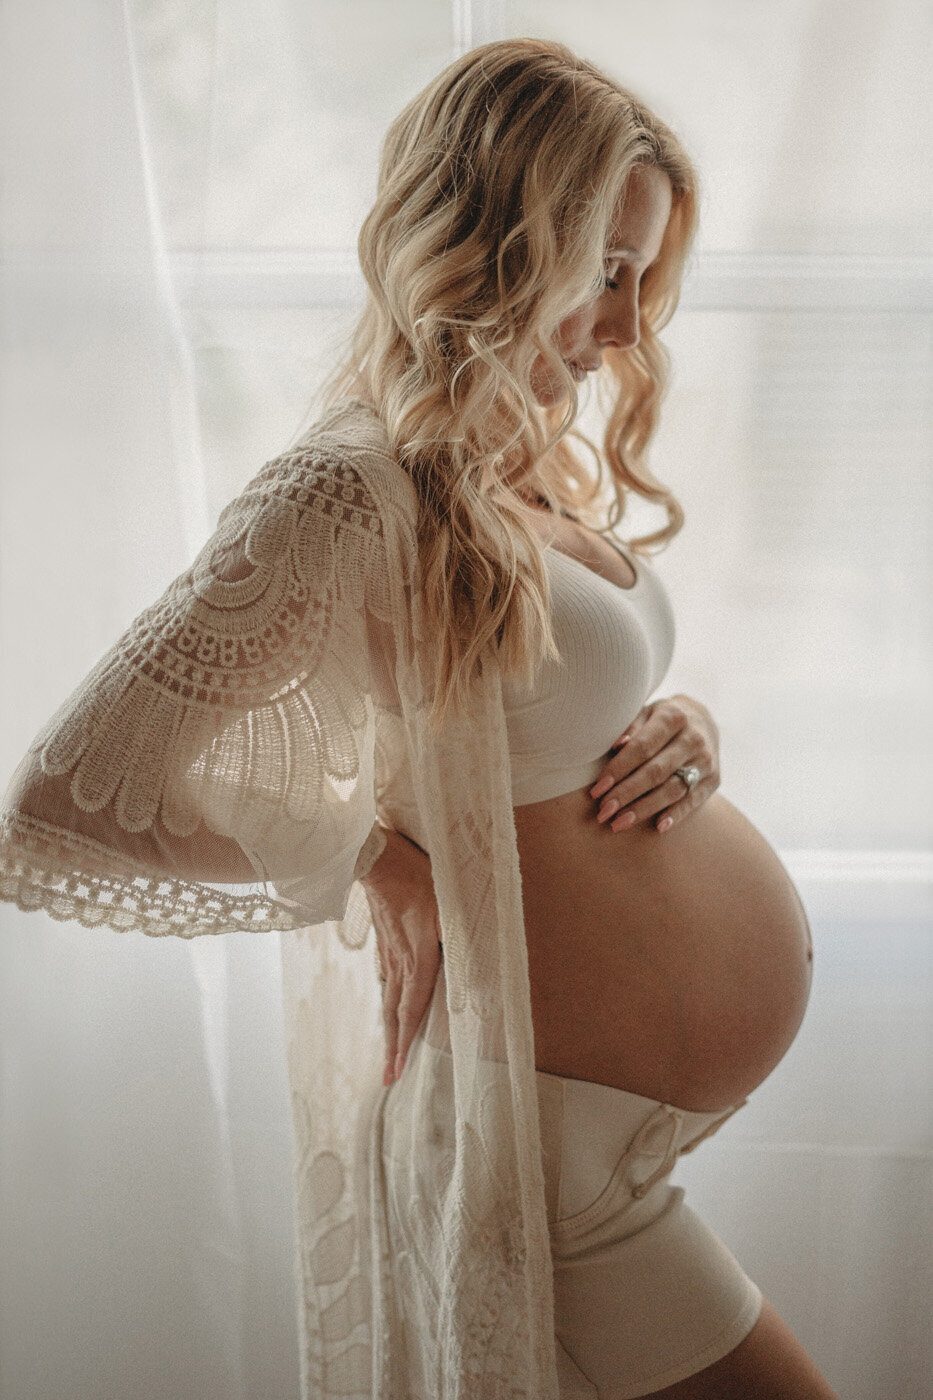 Charleston maternity photographer, family photography Charleston